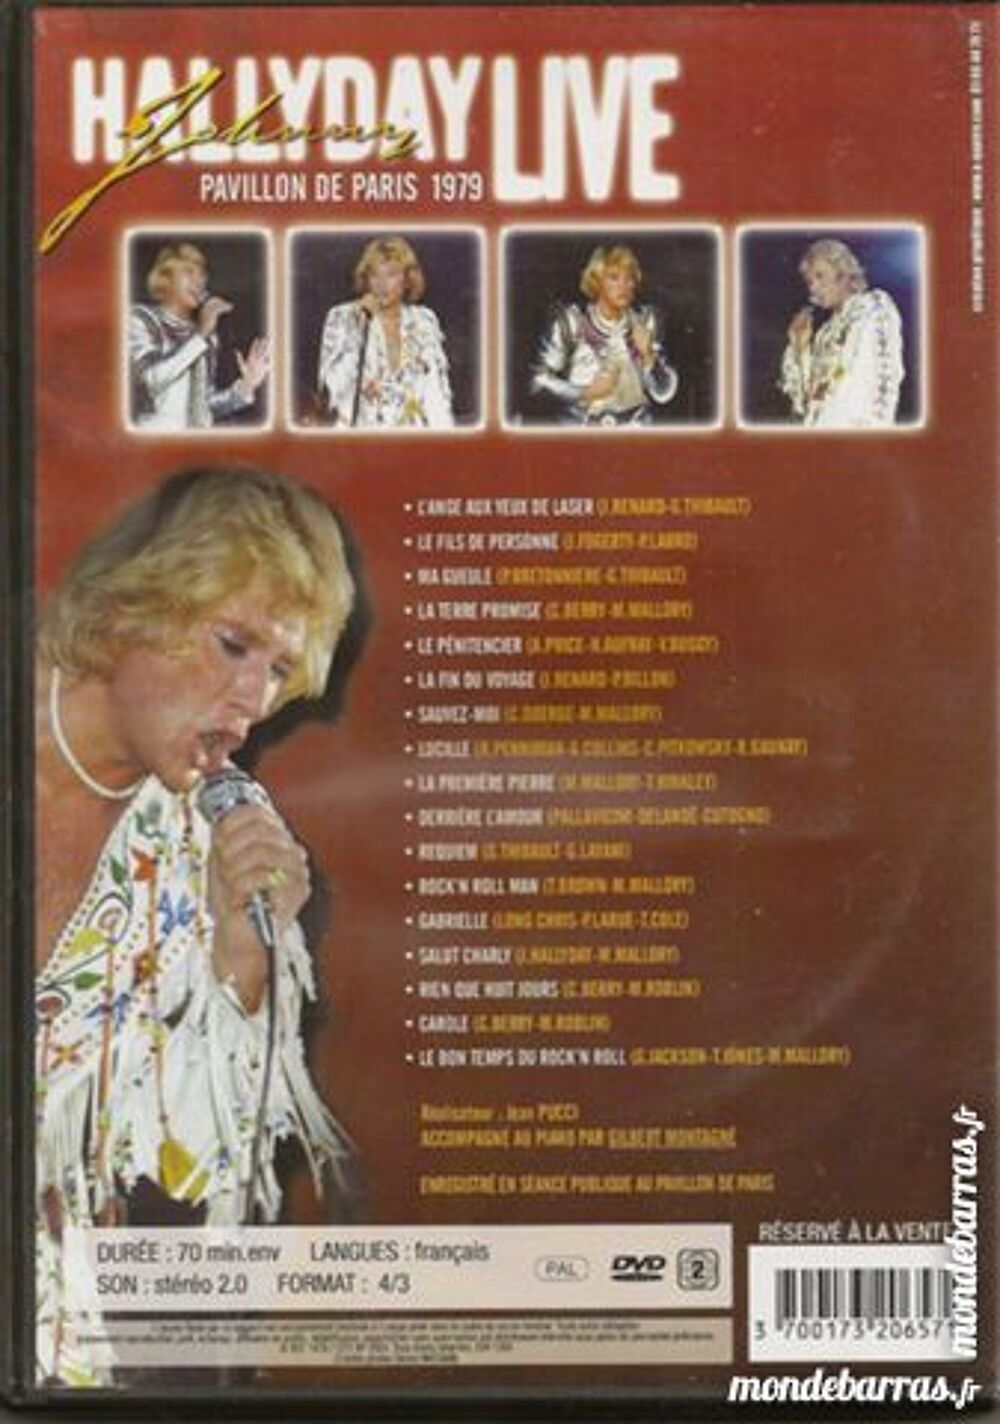 Johnny Hallyday Pavillon de Paris 1979 DVD et blu-ray